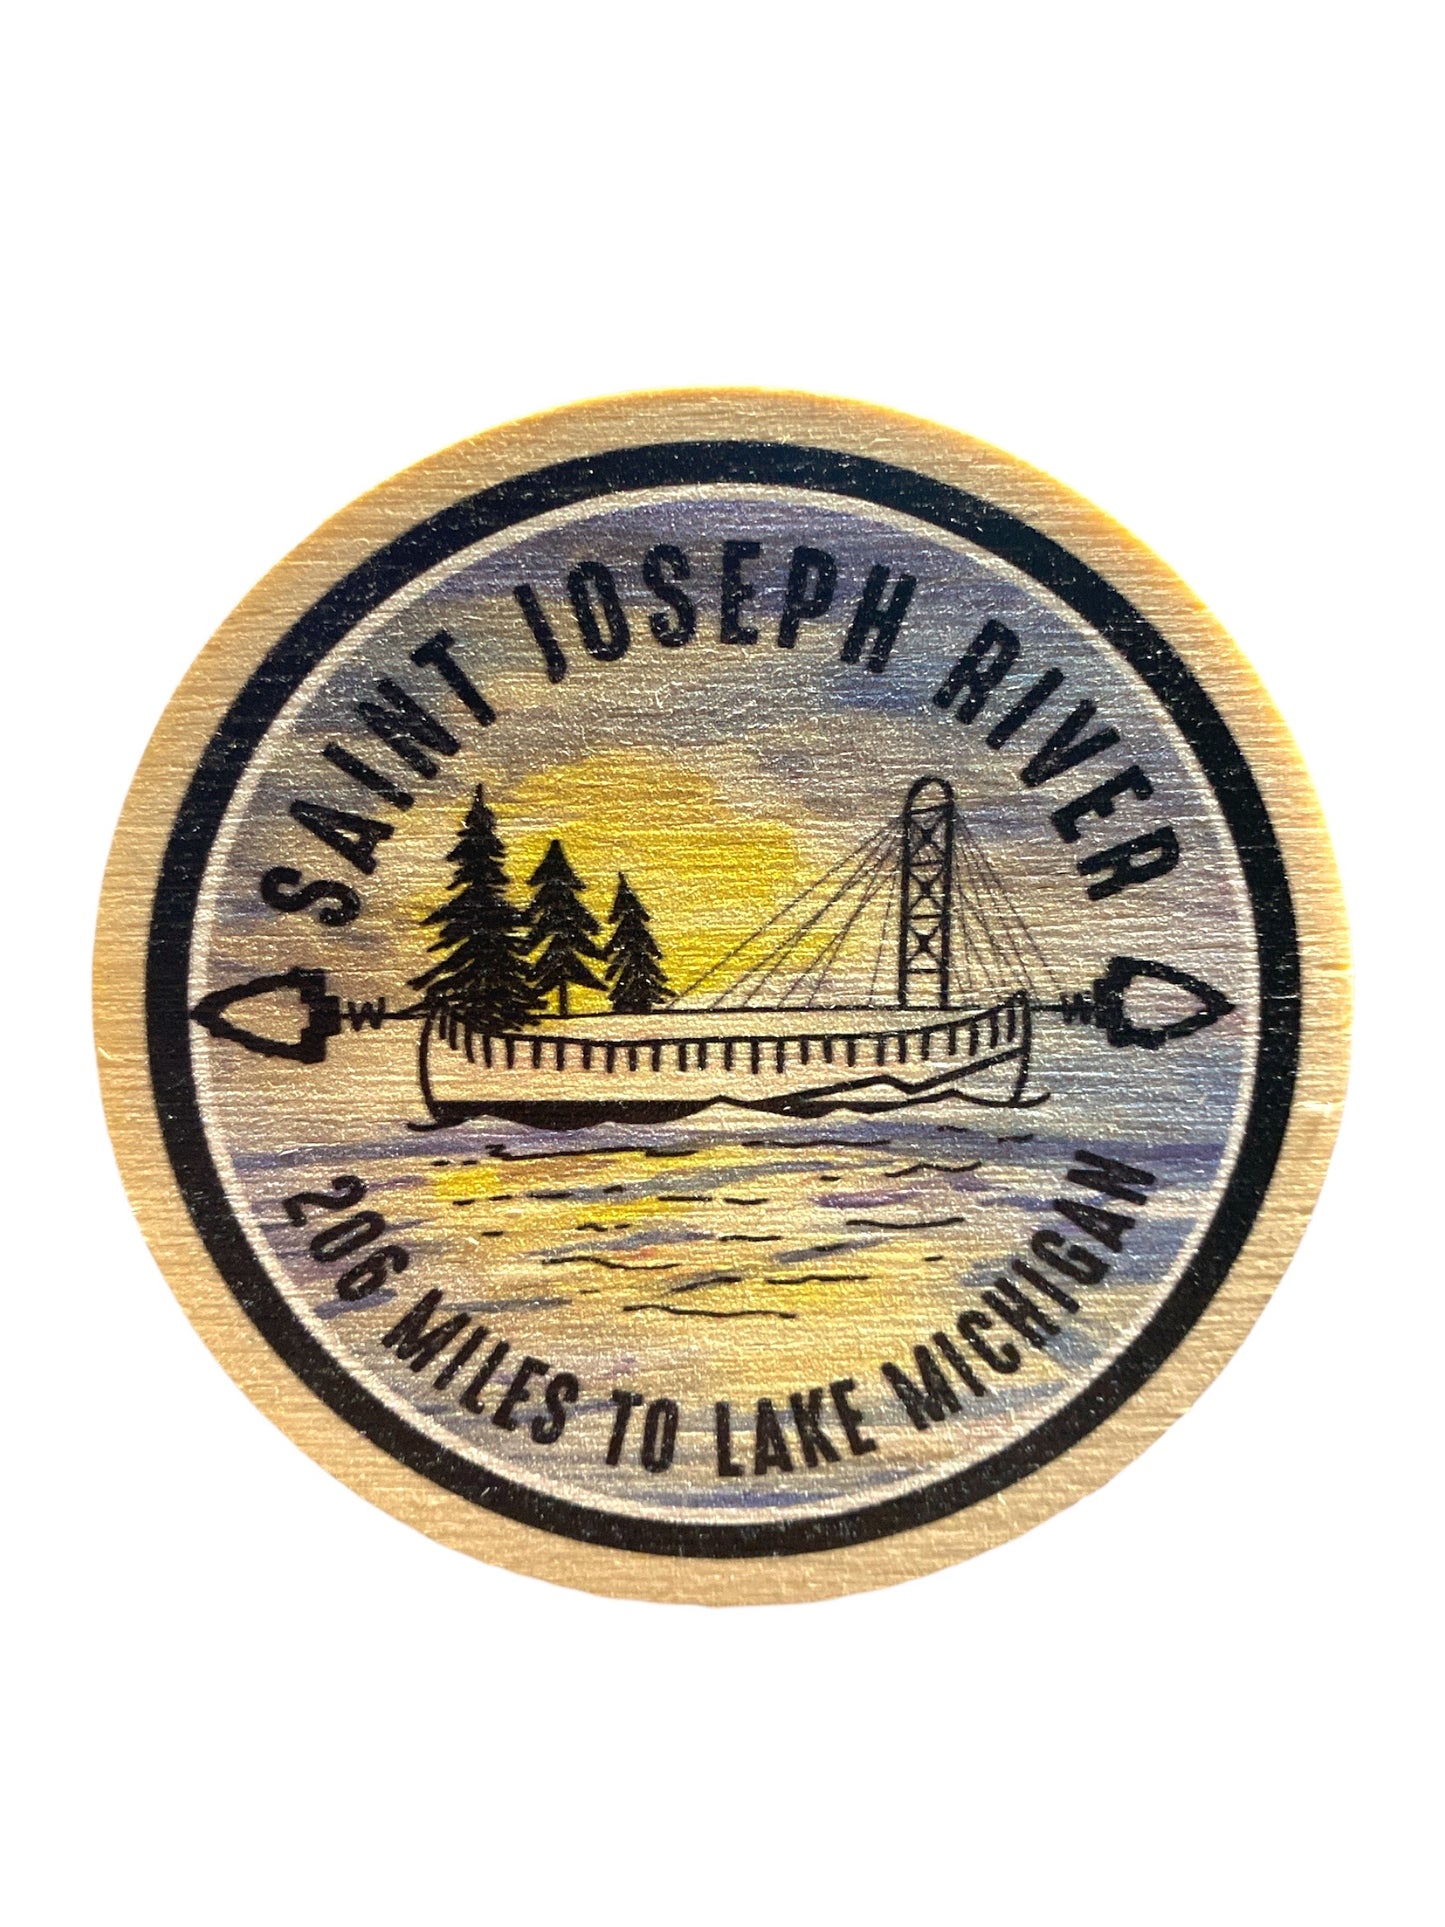 Saint Joseph River 206 to Lake Michigan magnet